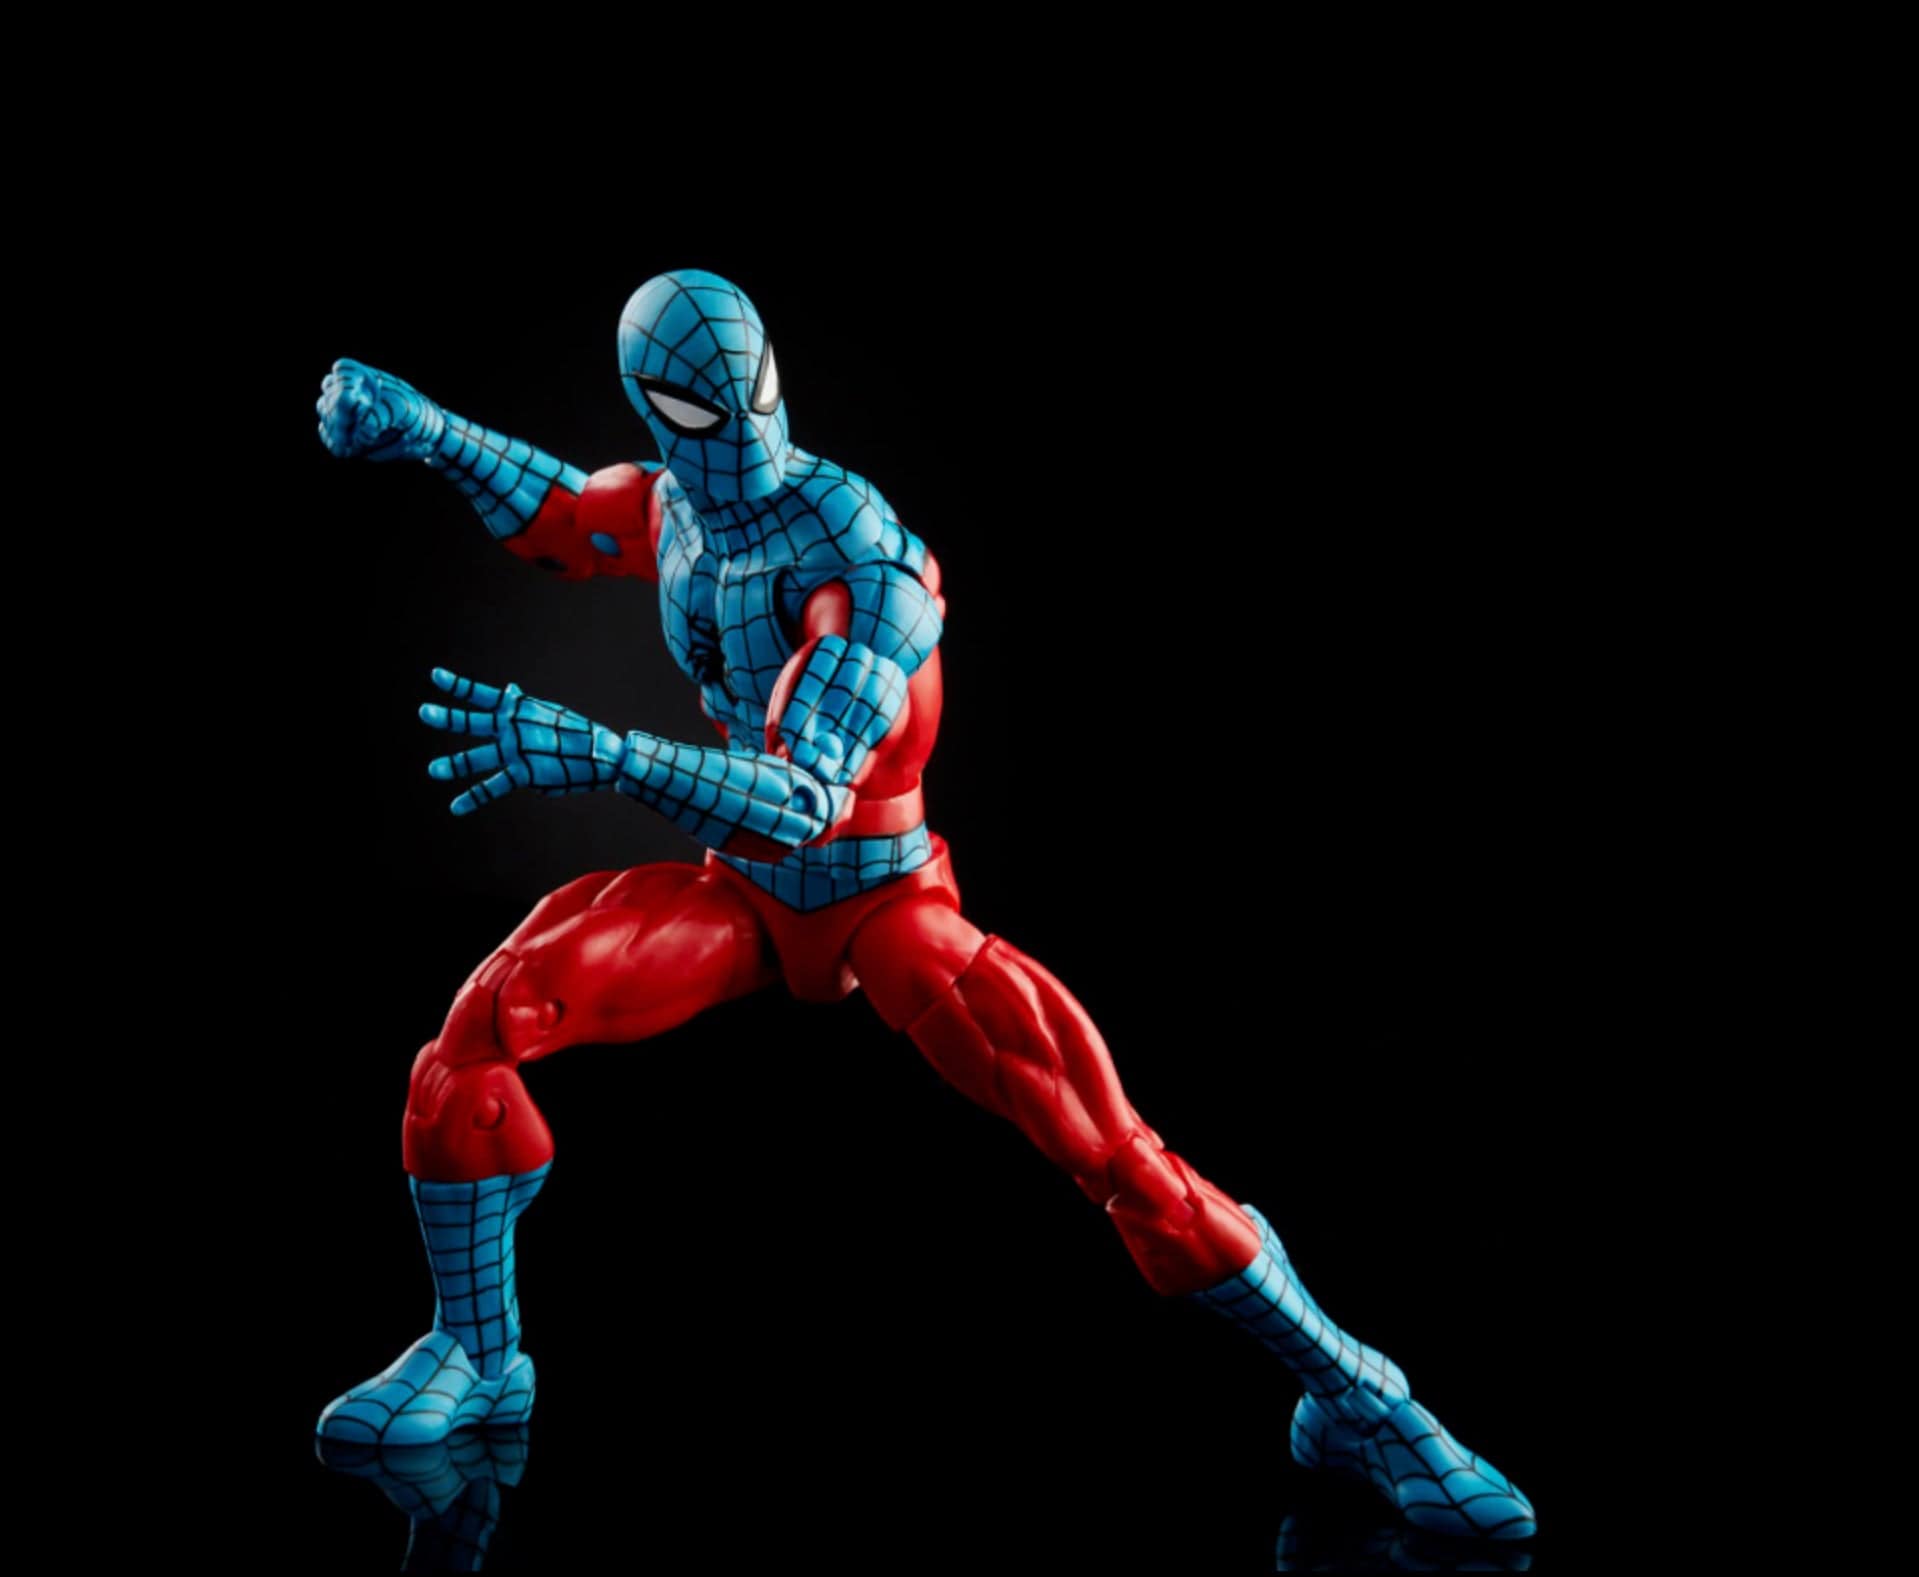 Spider-Man Marvel Legends Series 6-Inch Web-Man Action Figure